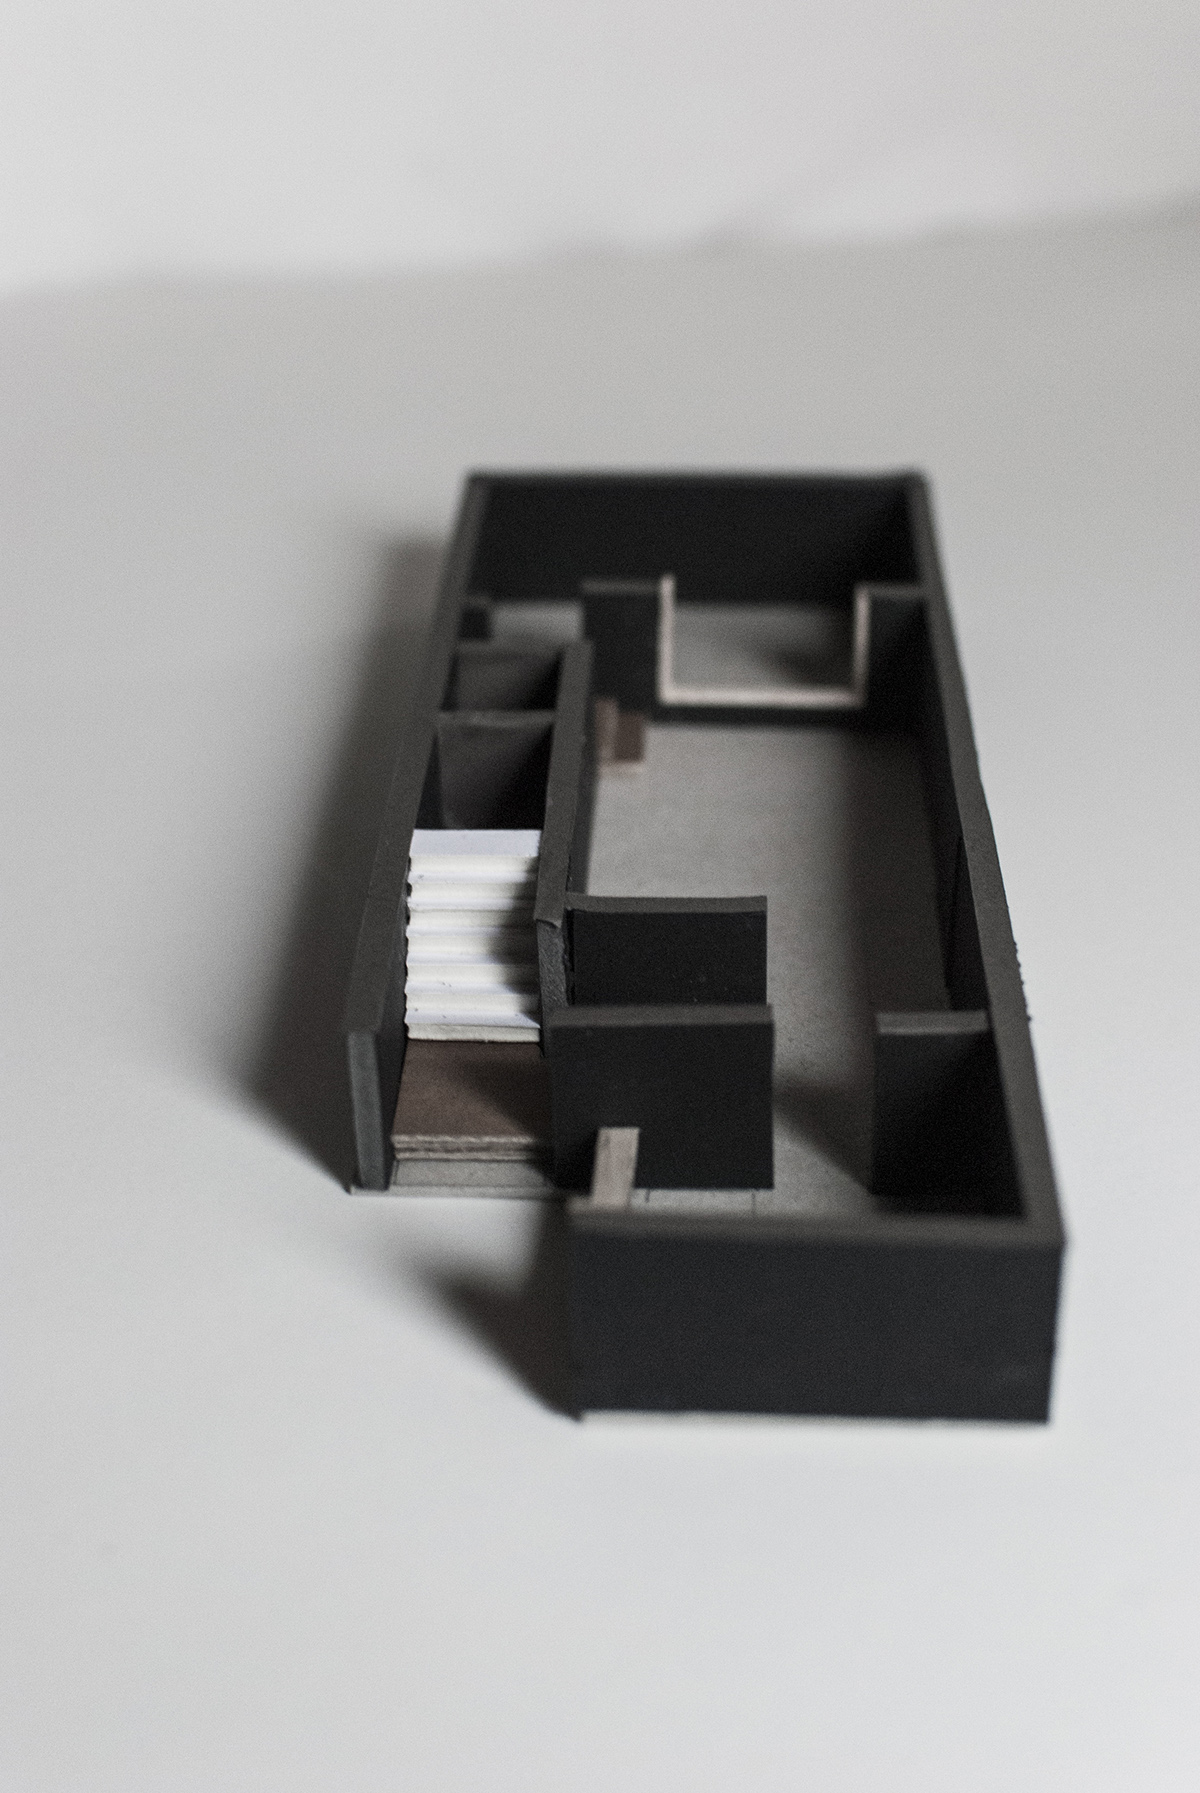 Shadow House Liddicoat & Goldhill London models bruxelles brussels saint-luc Space design arch 3D modeling